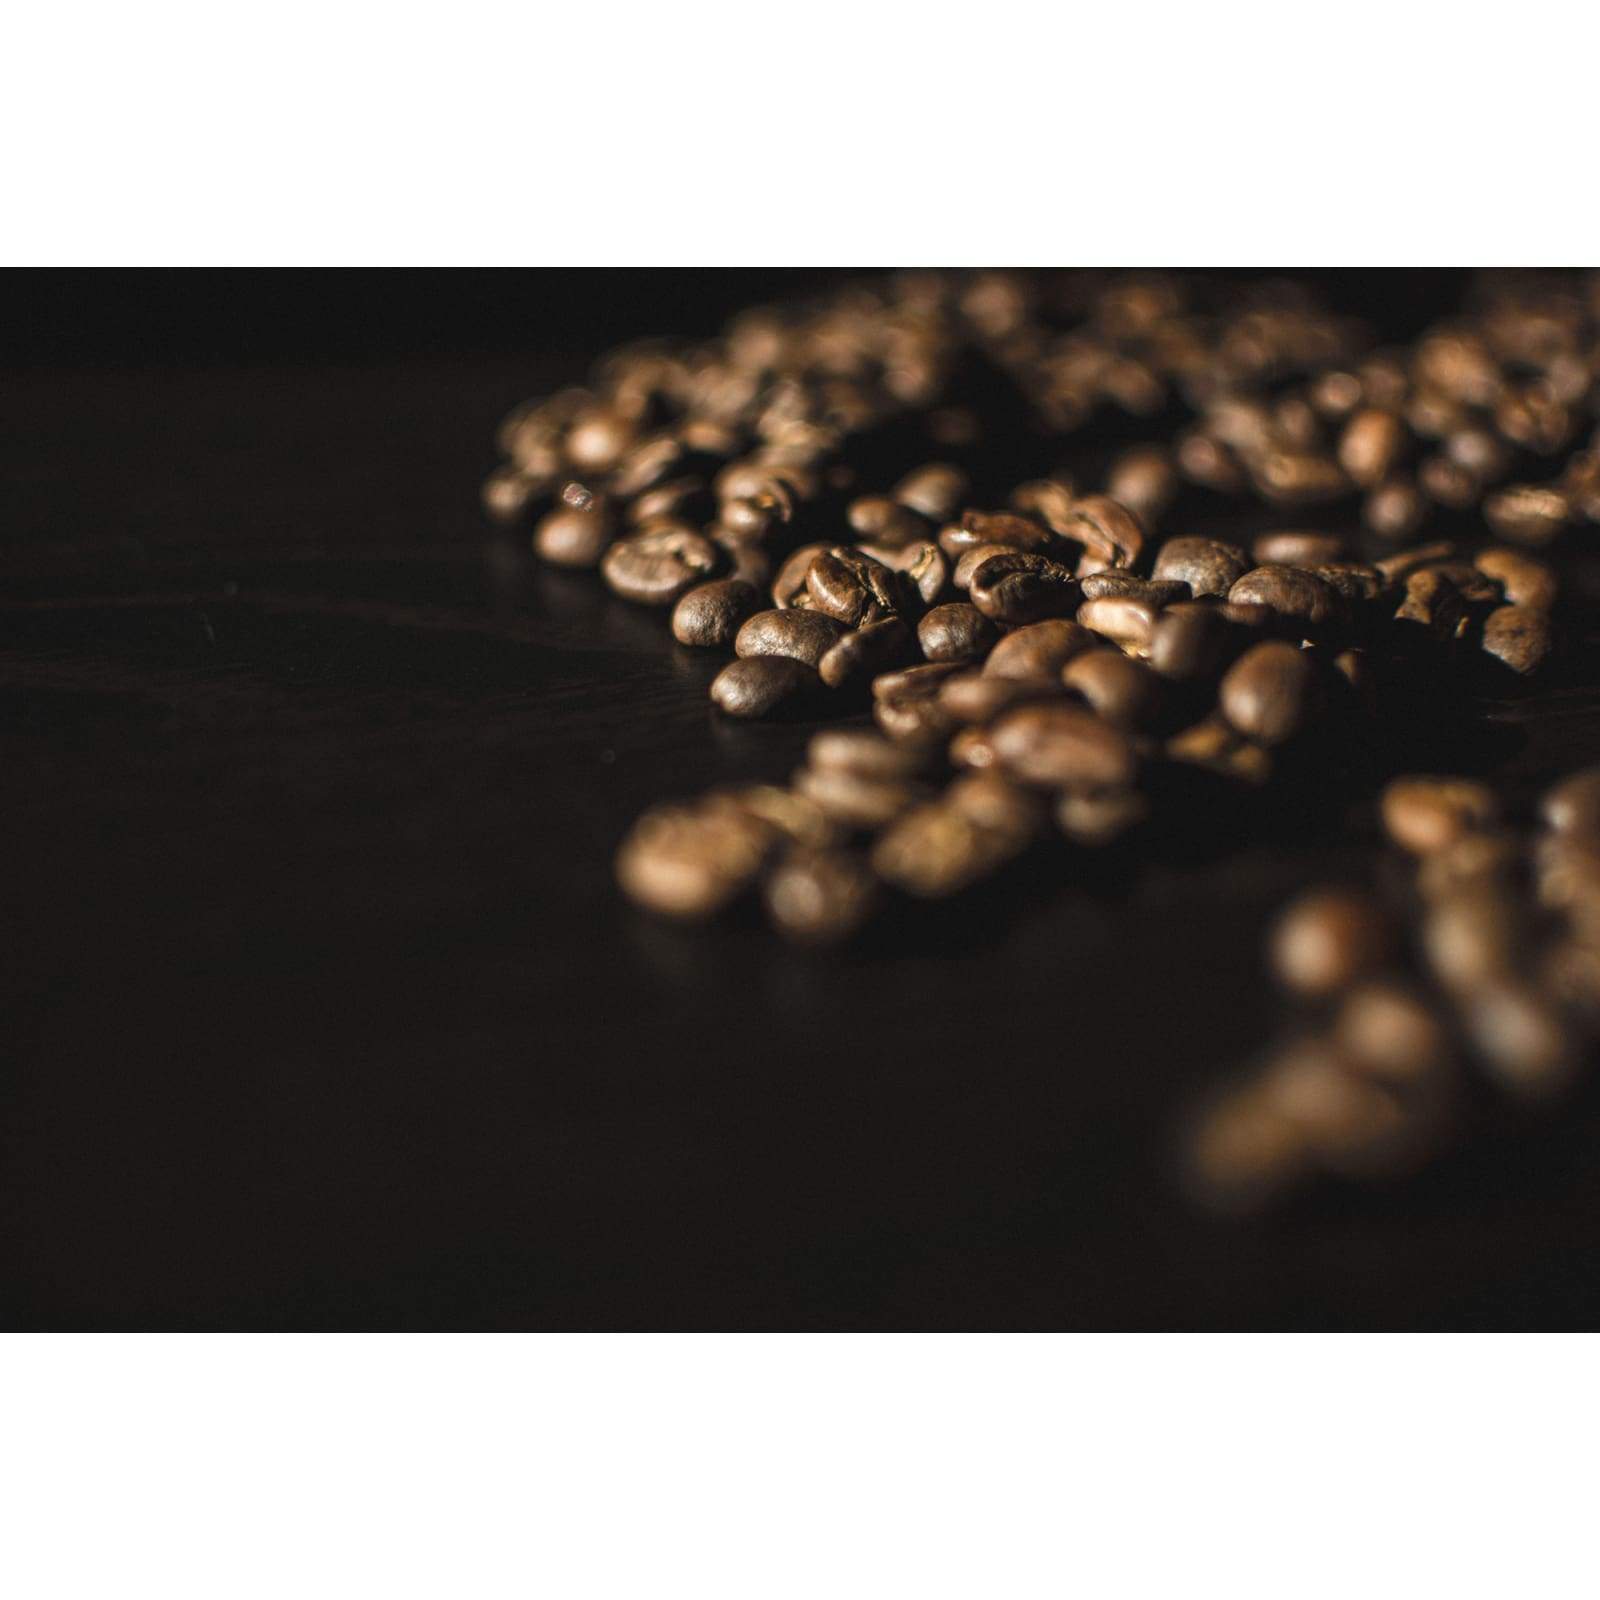 Mexico Craft Coffee - Single Origin - 12oz / Whole Bean - Coffee - $15.25